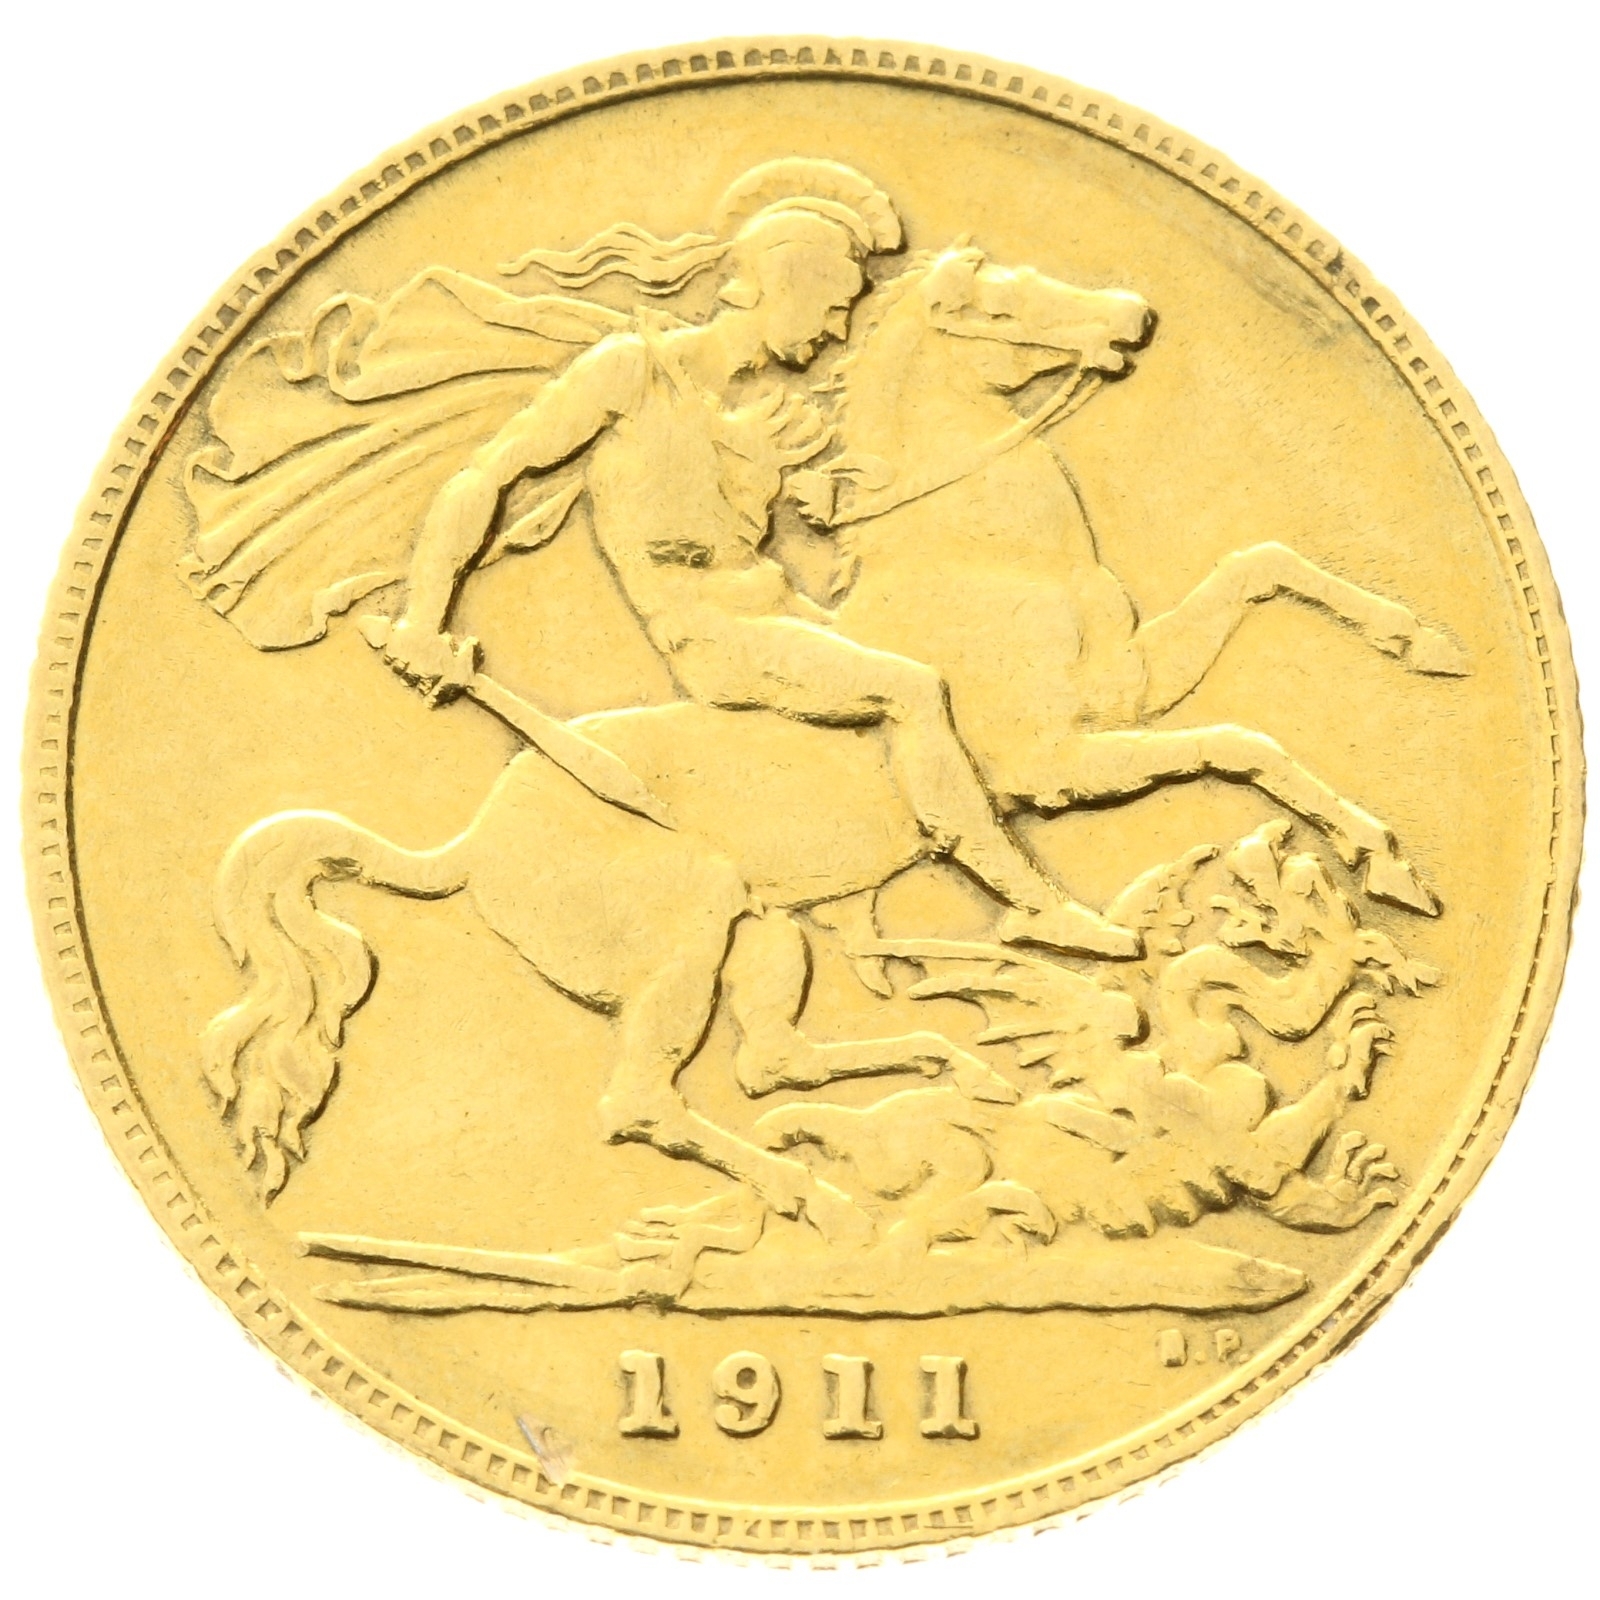 United Kingdom - ½ sovereign - 1911 - George V